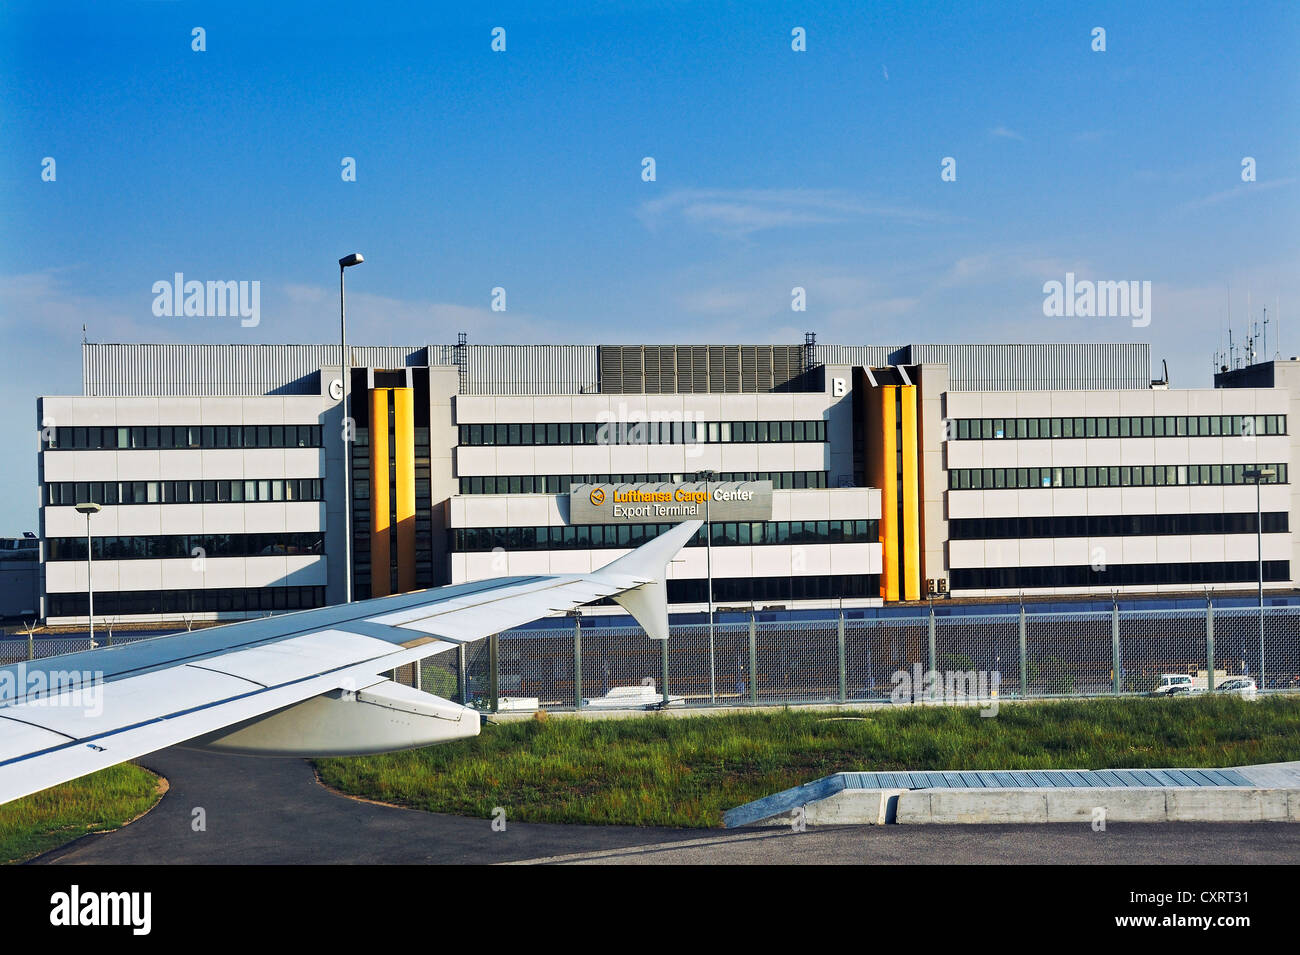 Lufthansa Cargo Centre, l'aéroport de Frankfurt, Frankfurt am Main, Hesse, Germany, Europe Banque D'Images